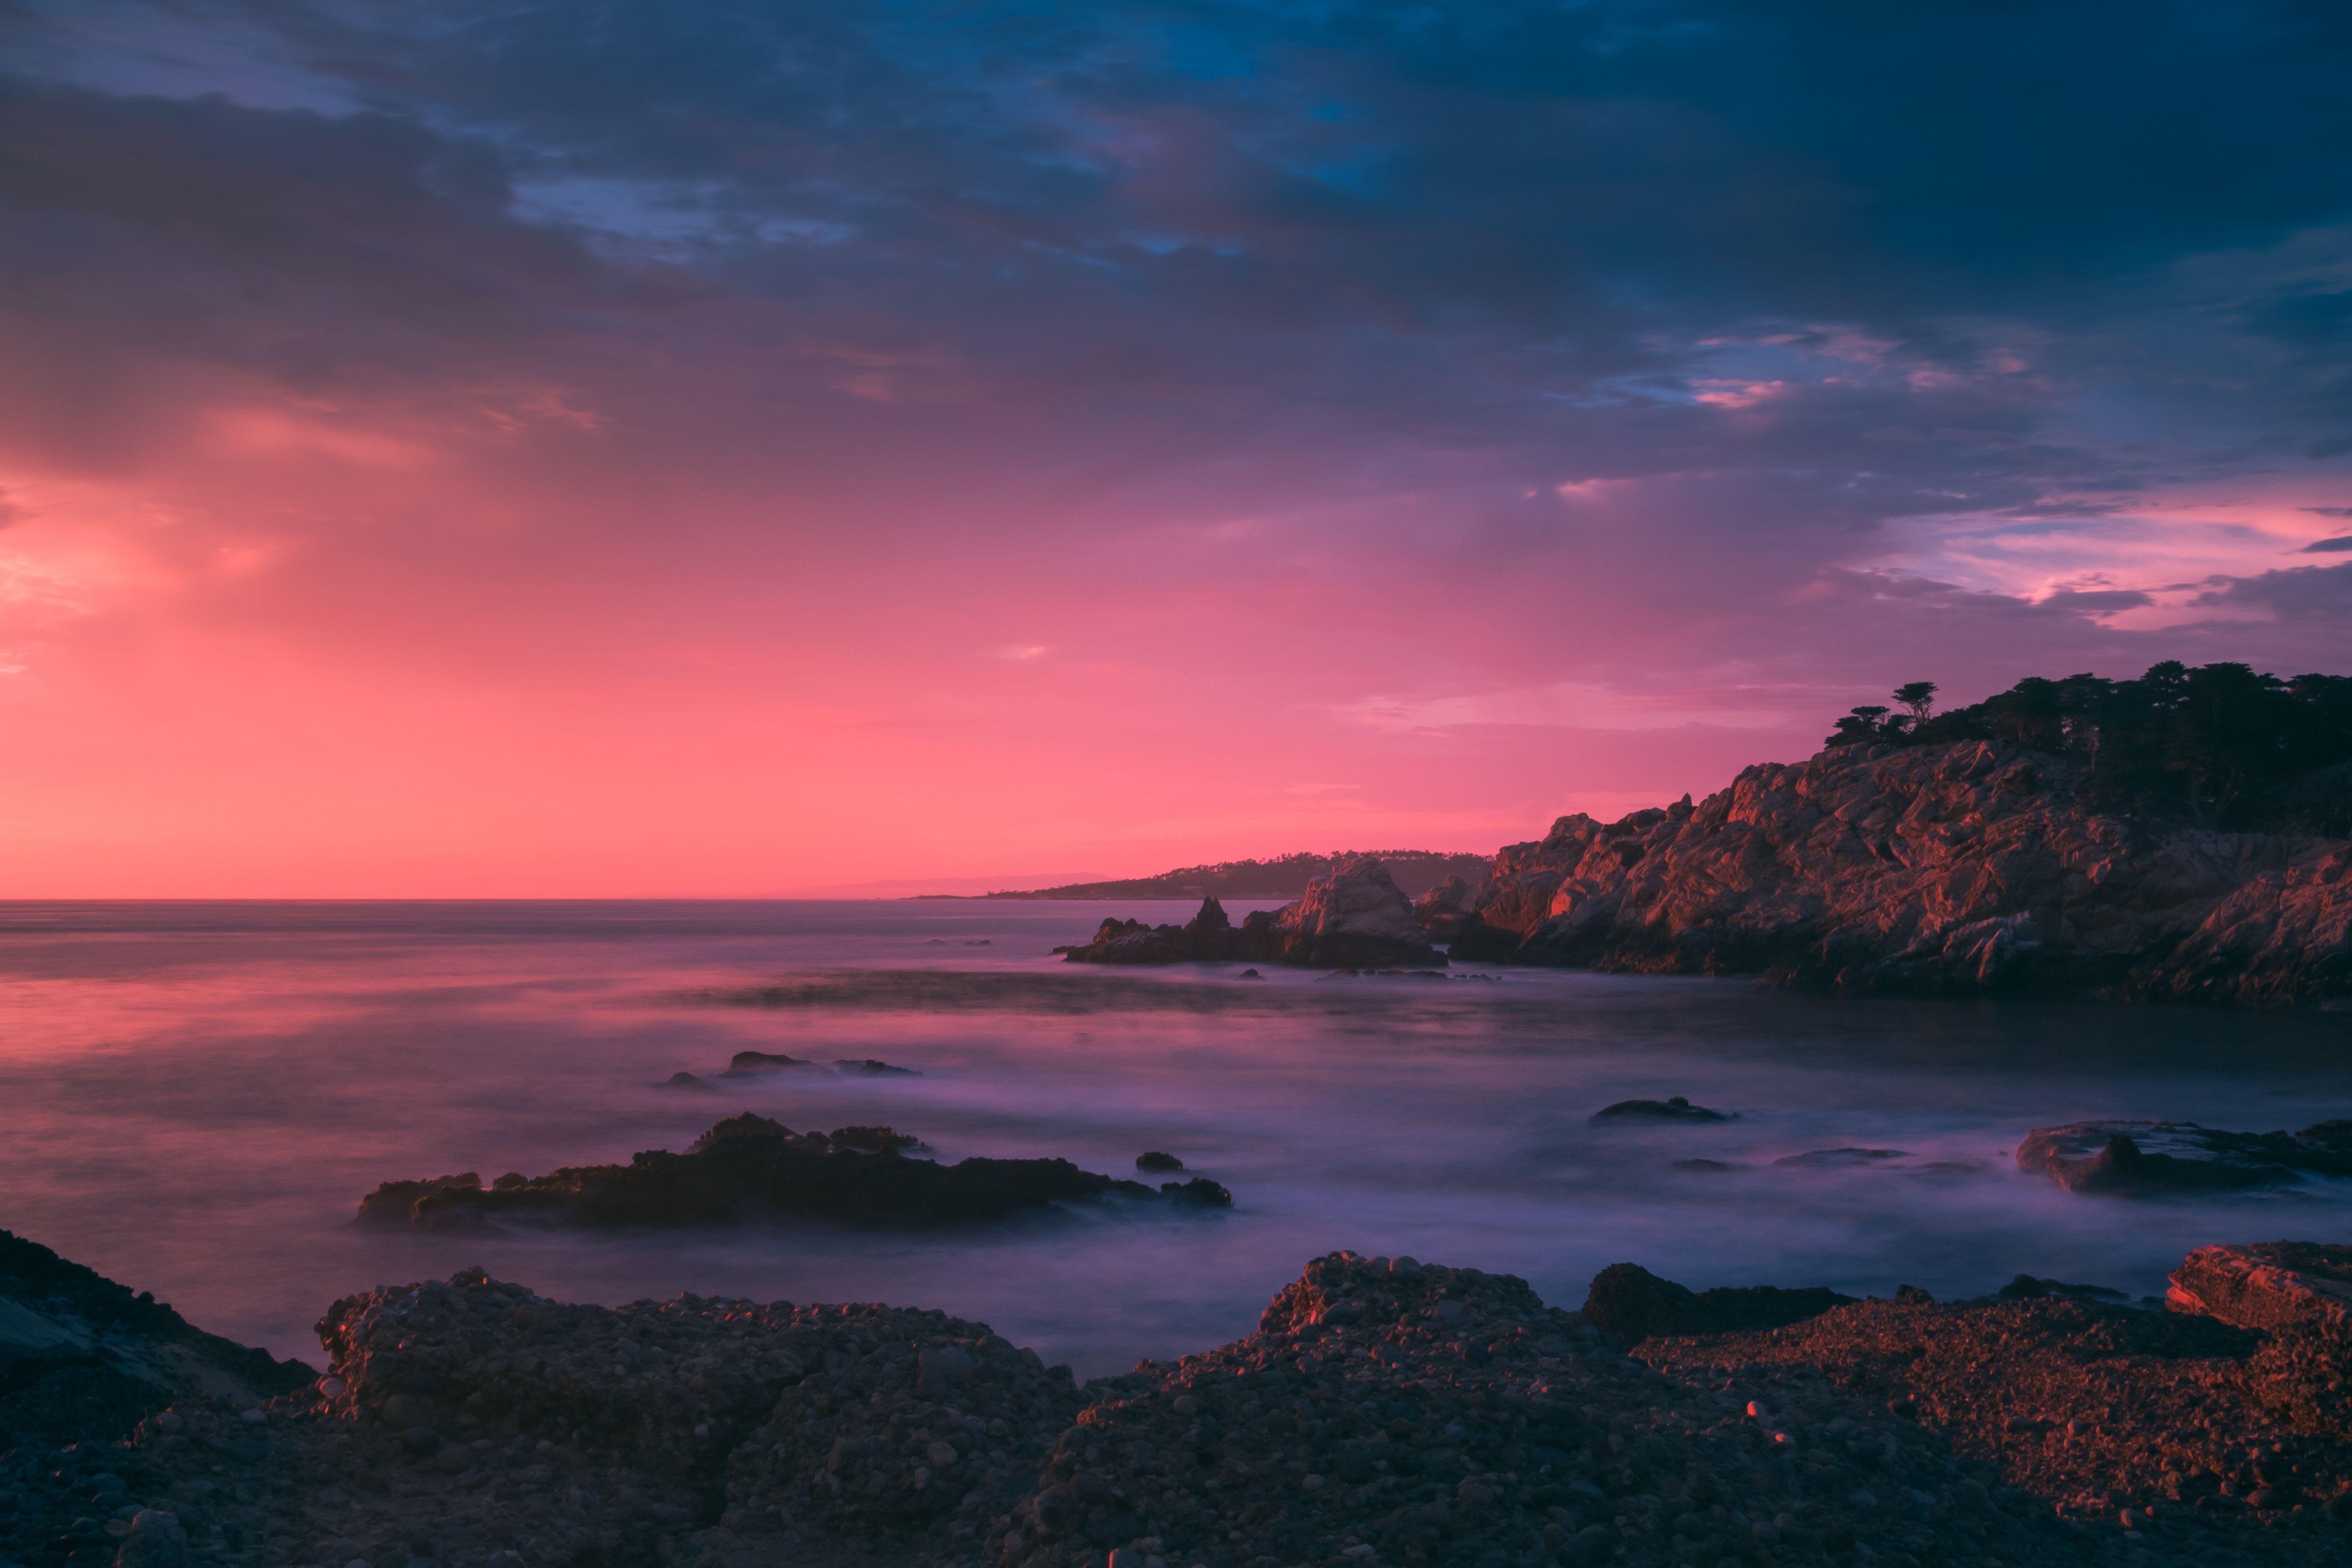 Blue and pink ocean sunset over Point Lobosimwaytoobusy.com